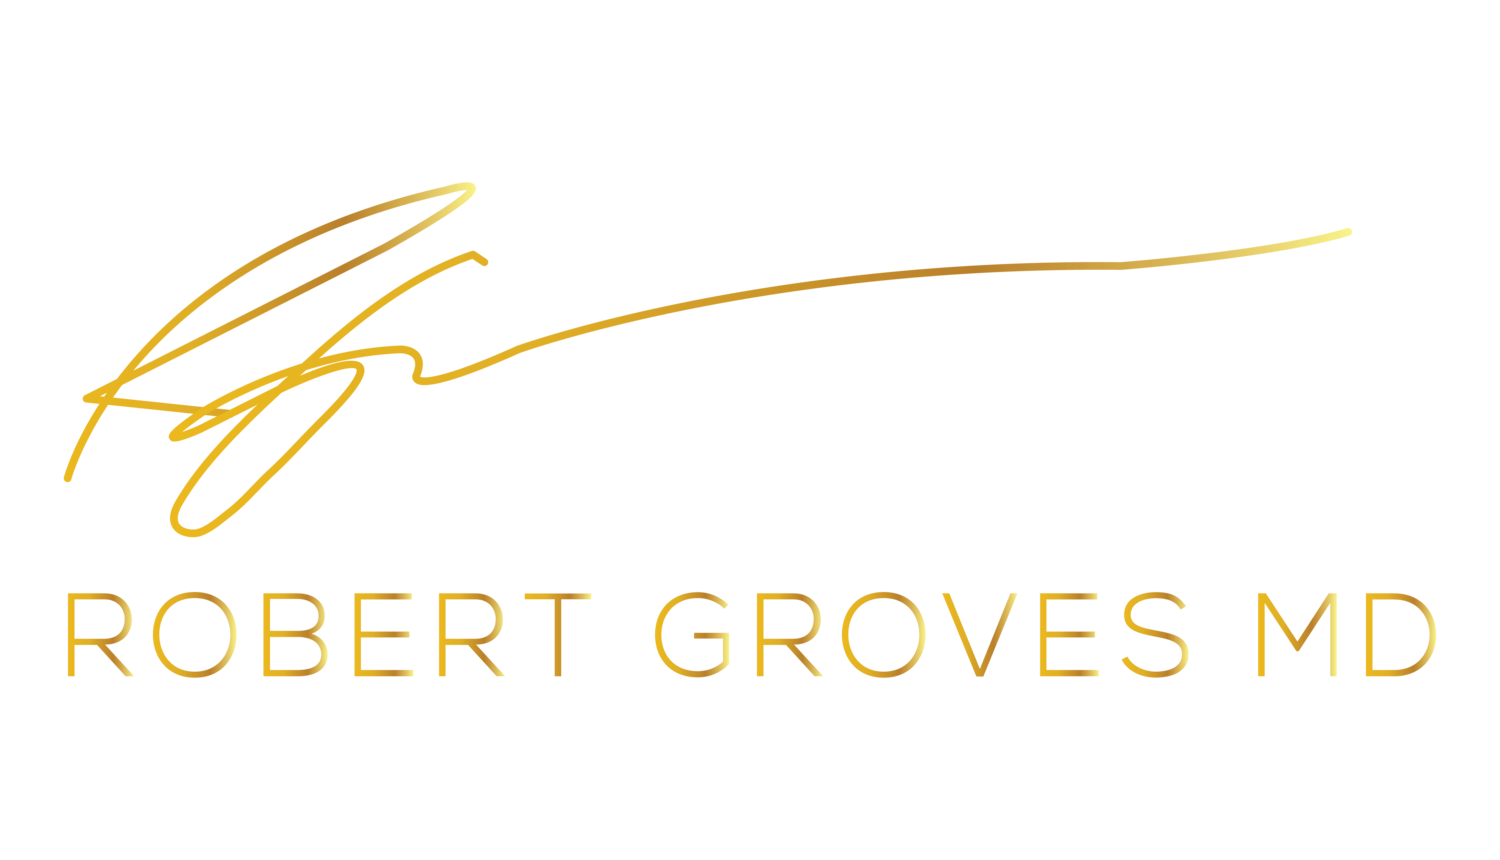 Robert Groves MD